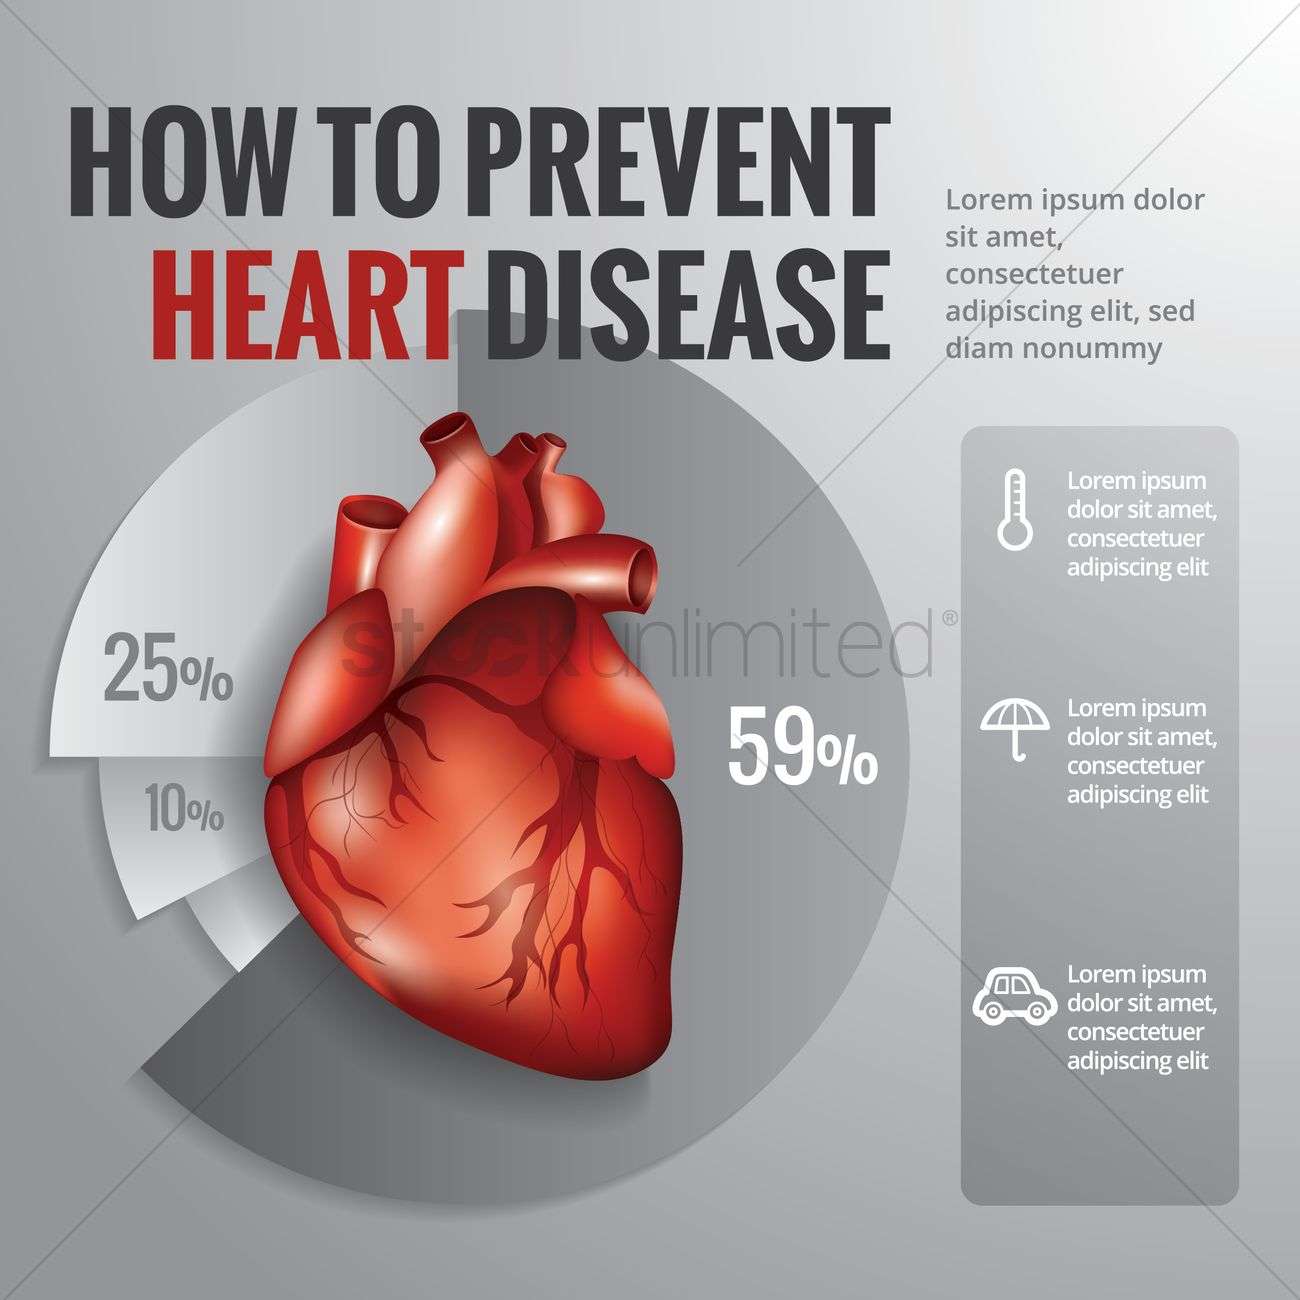 How to prevent heart disease diagram Vector Image ...